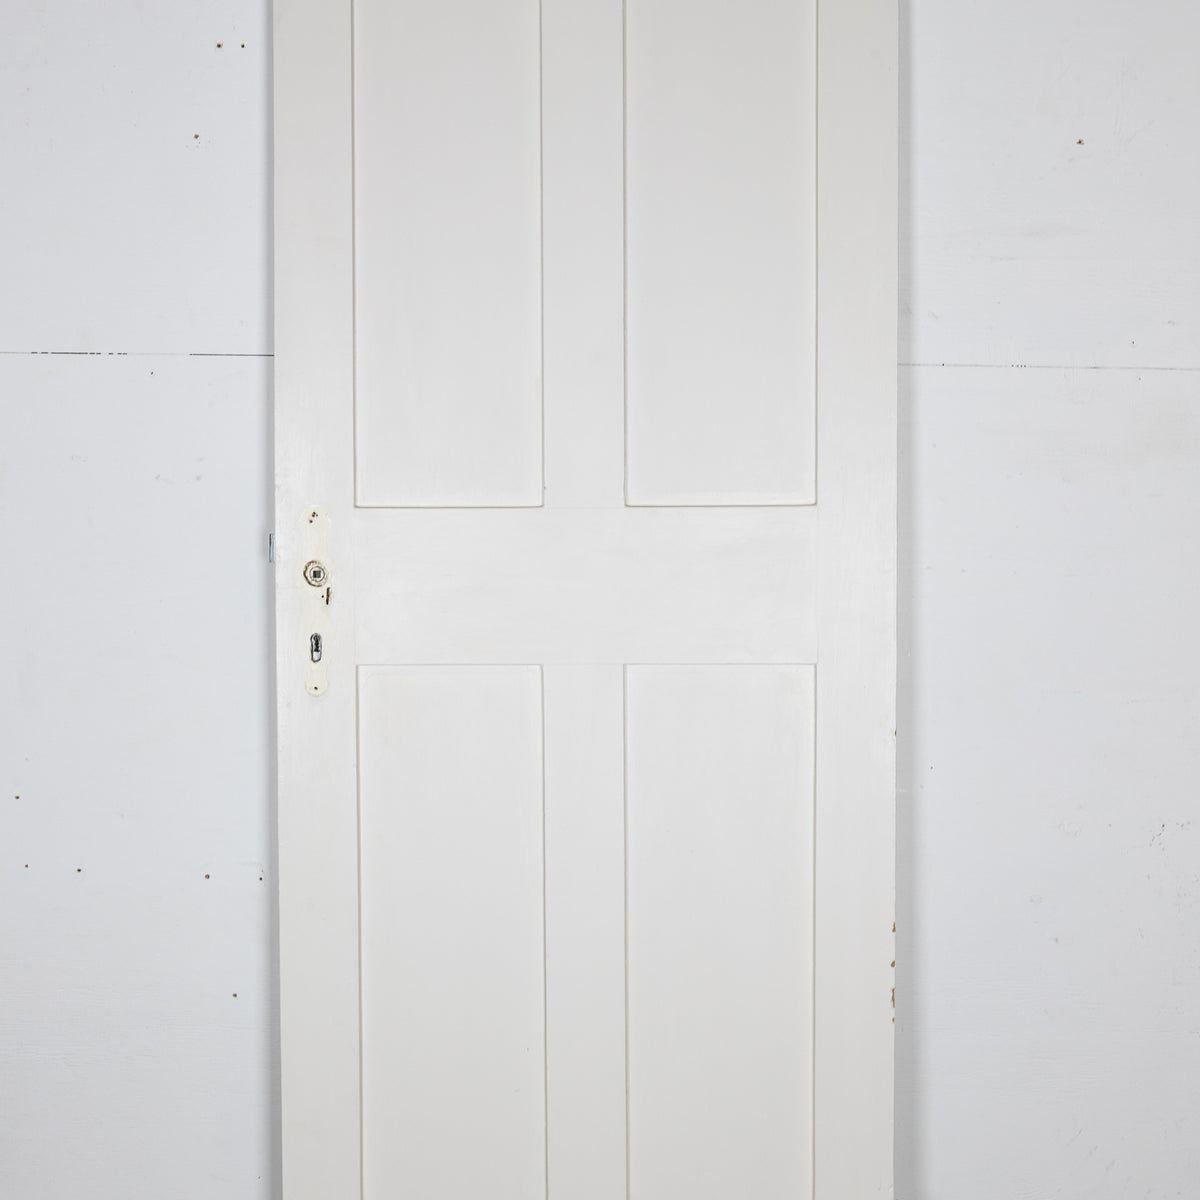 Antique Victorian 4 Panel Door - 184 x 68.5cm | The Architectural Forum